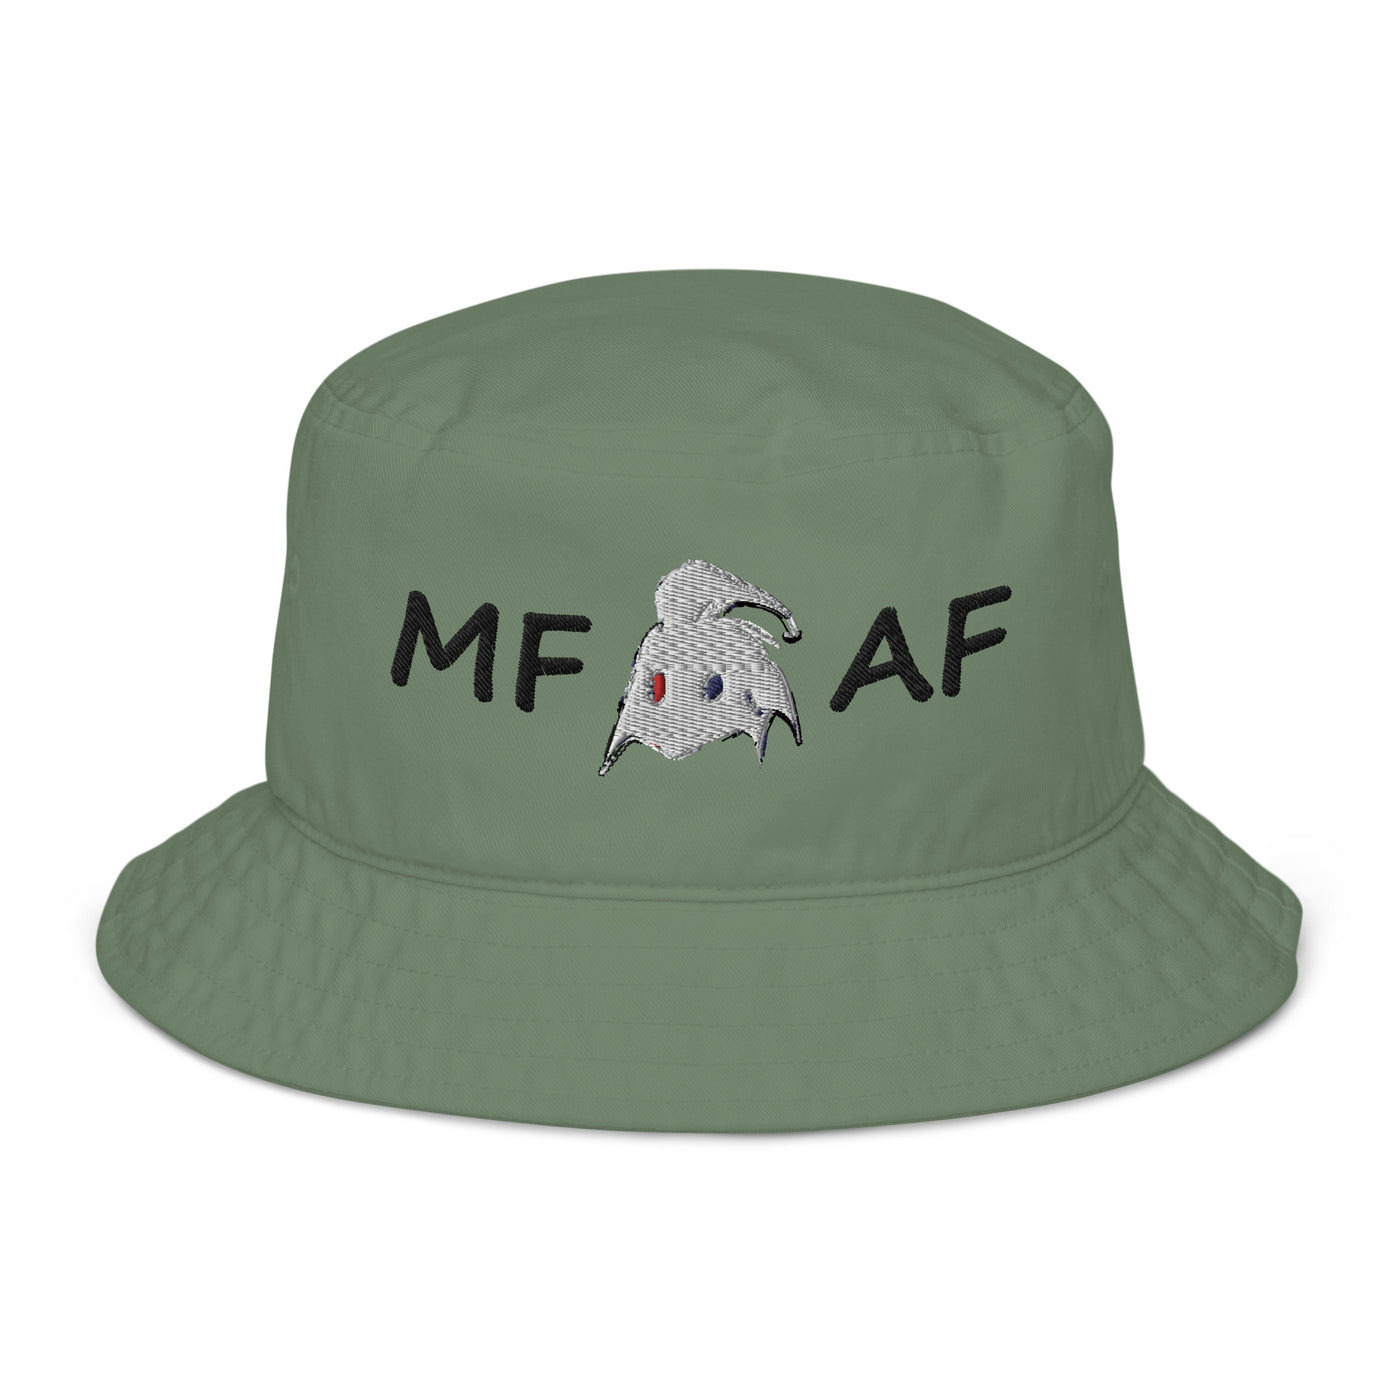 MFAF  bucket hat